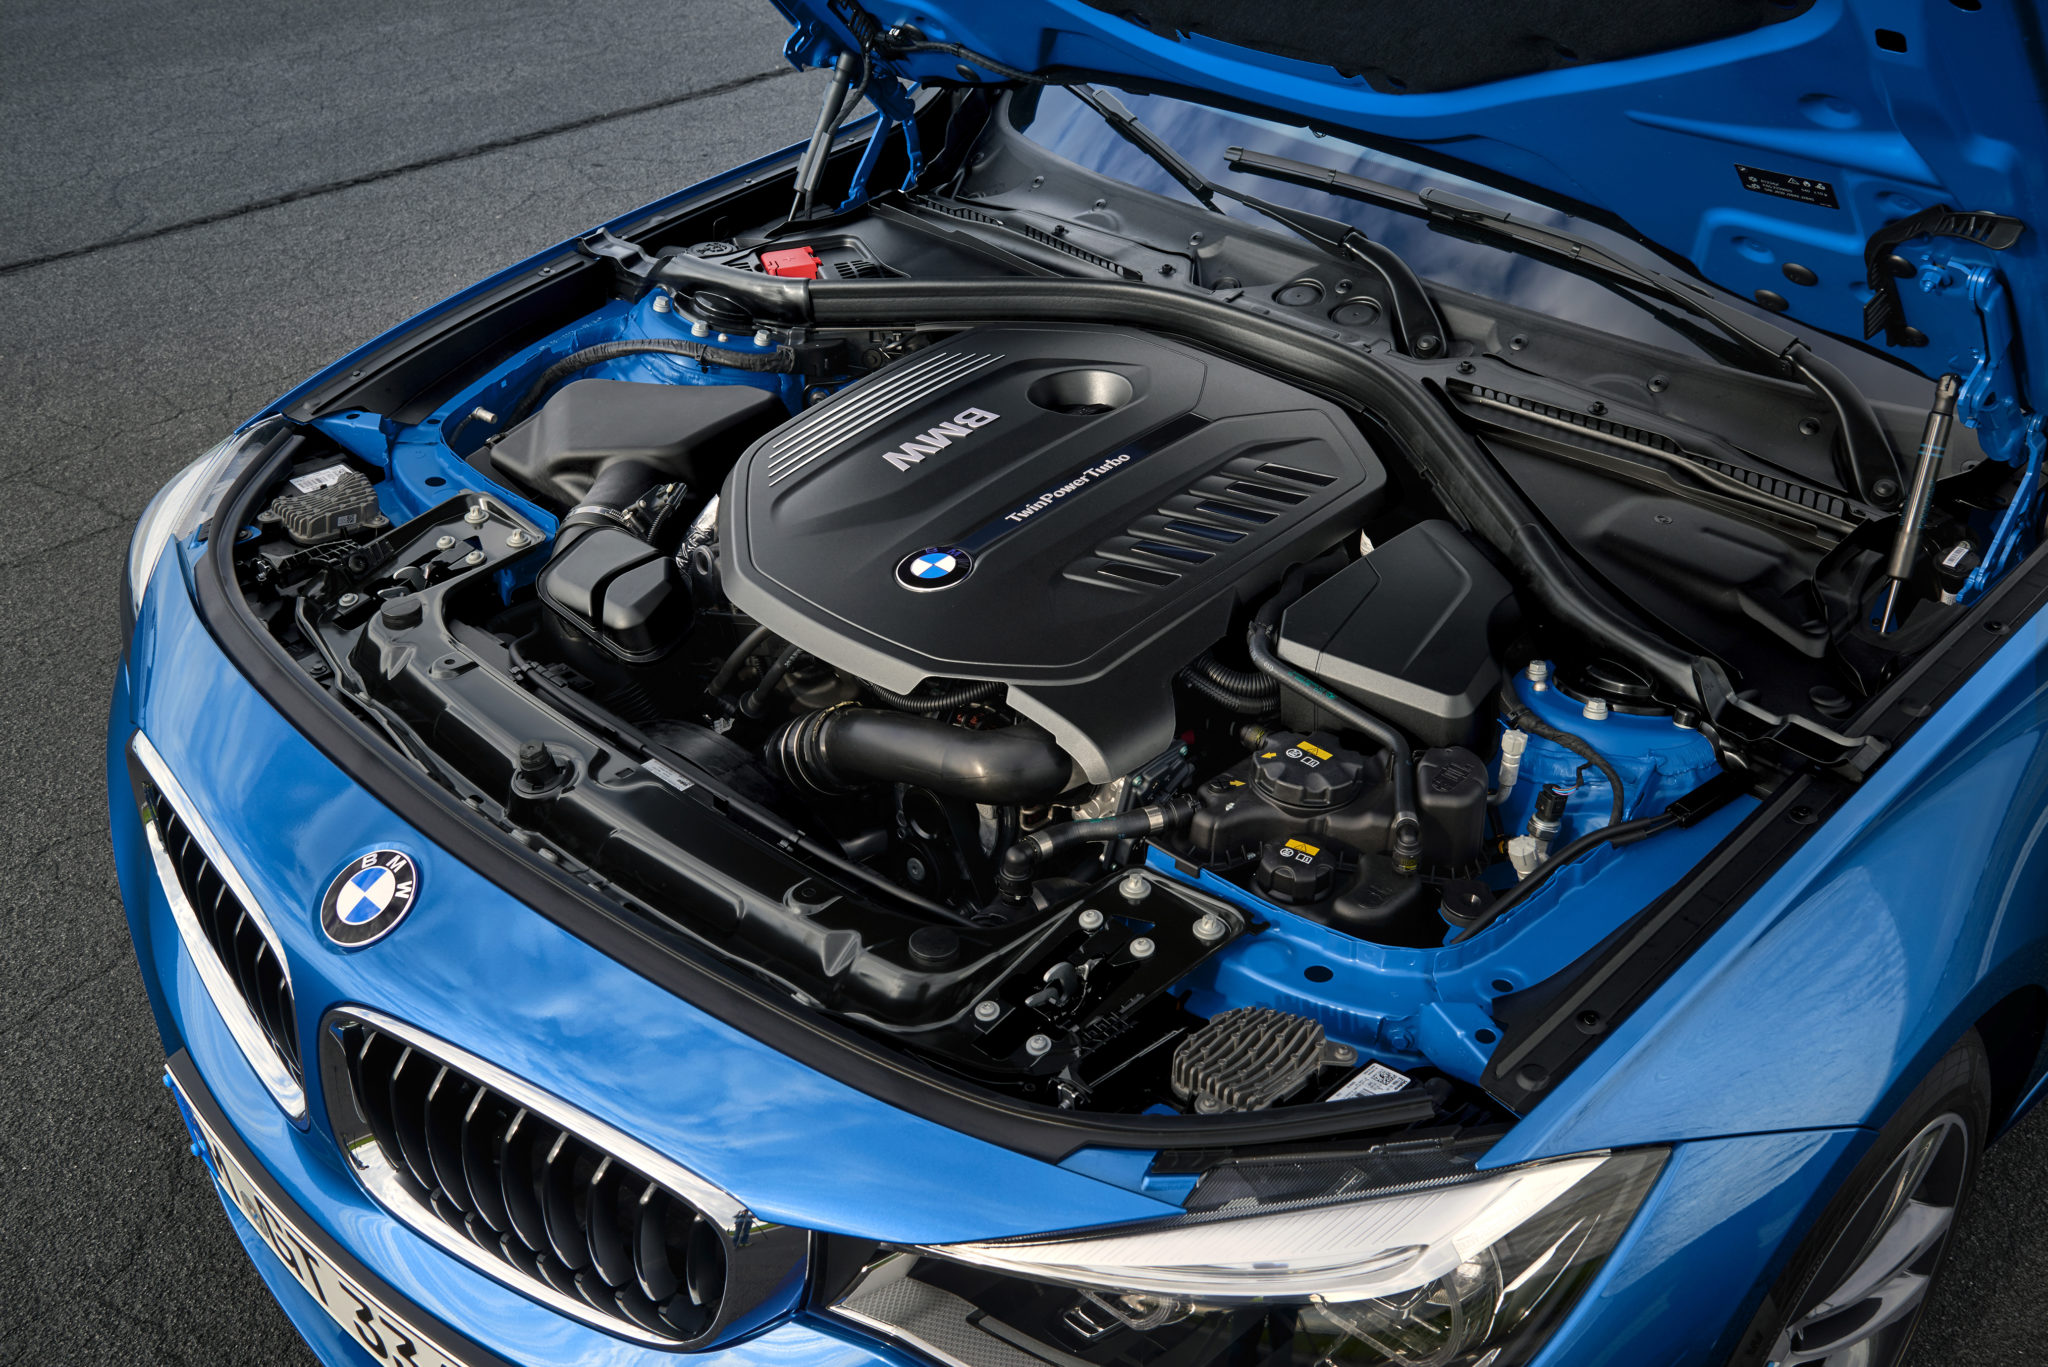 BMW B58 six cylinder engine wins second 10 Best Engines award from WardsAuto Best Viral News 